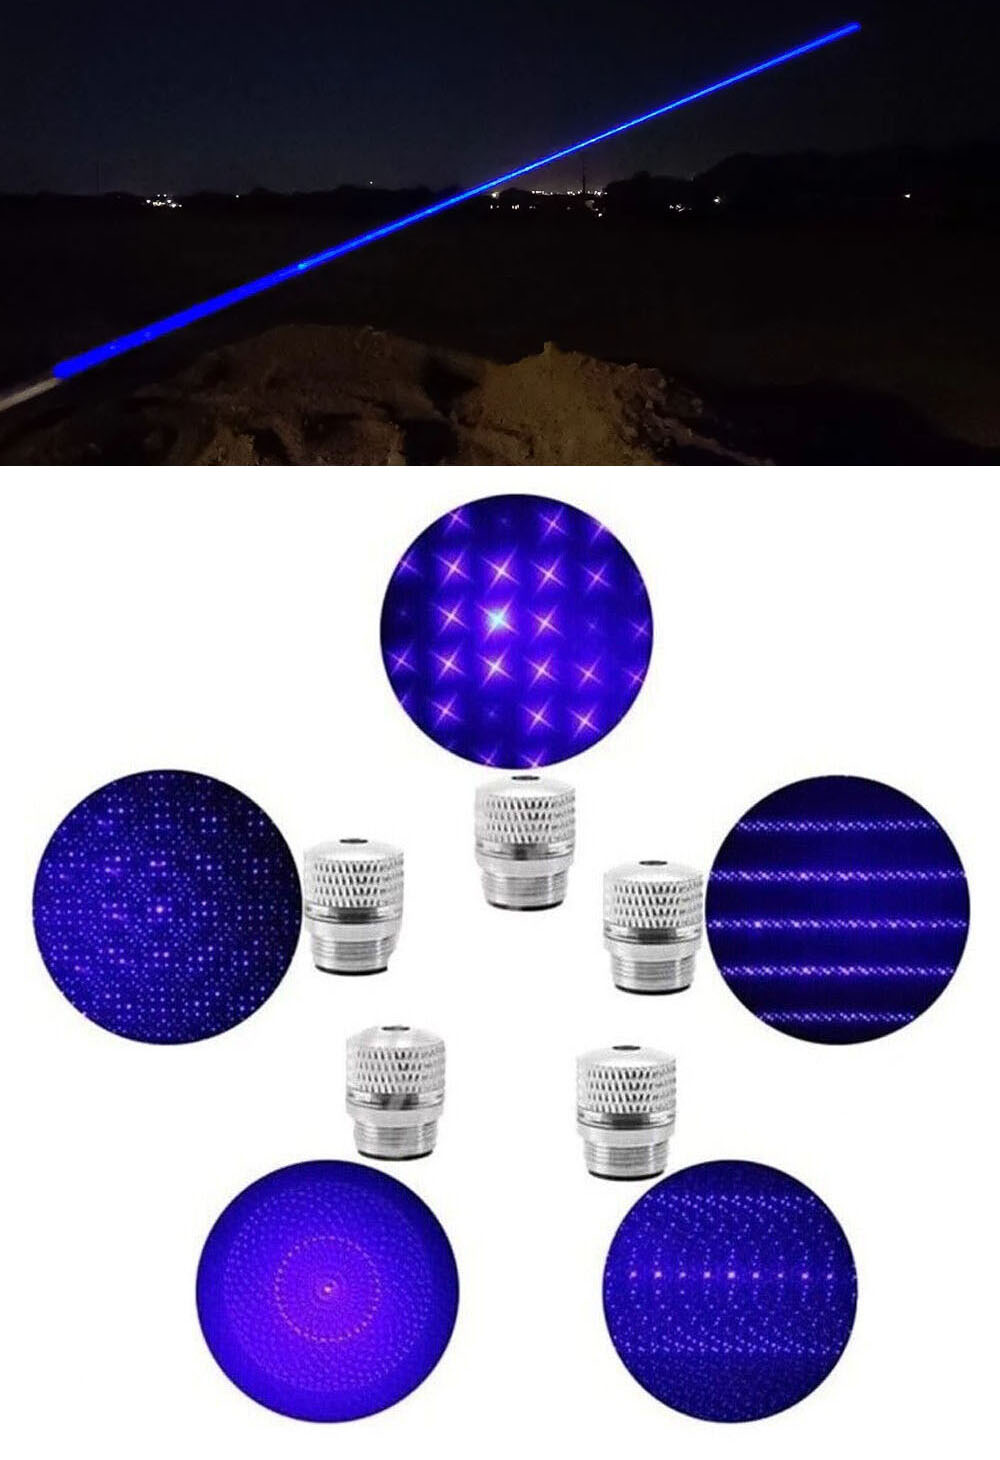 Puntatore laser blu con disegni